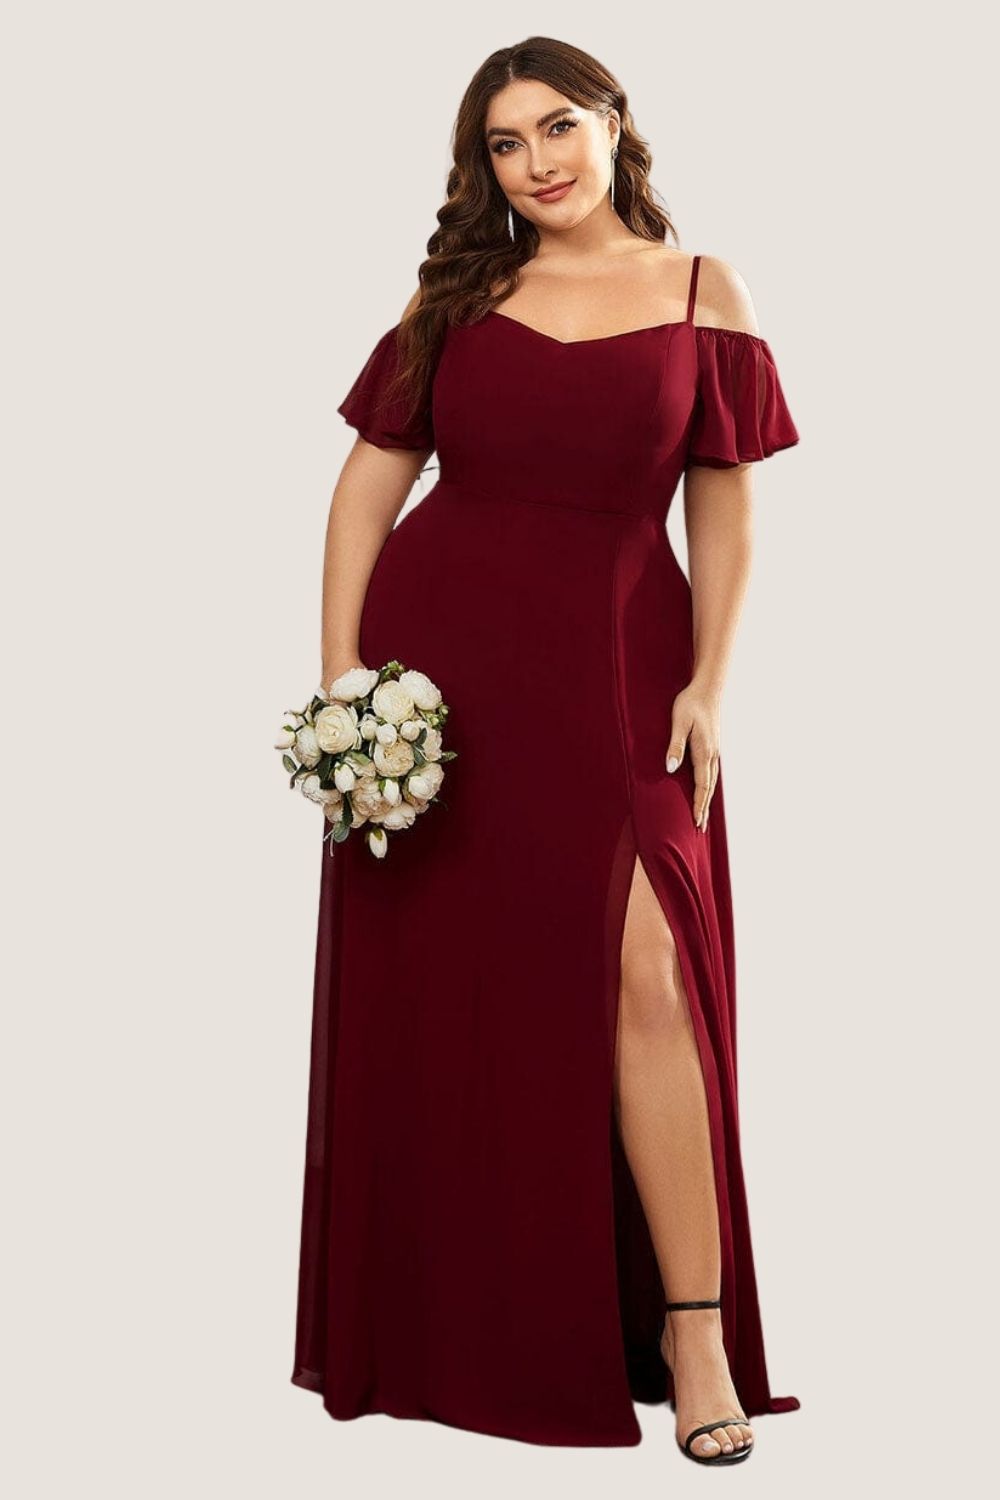 Amanda Burgundy Bridesmaid Dress by Dressology